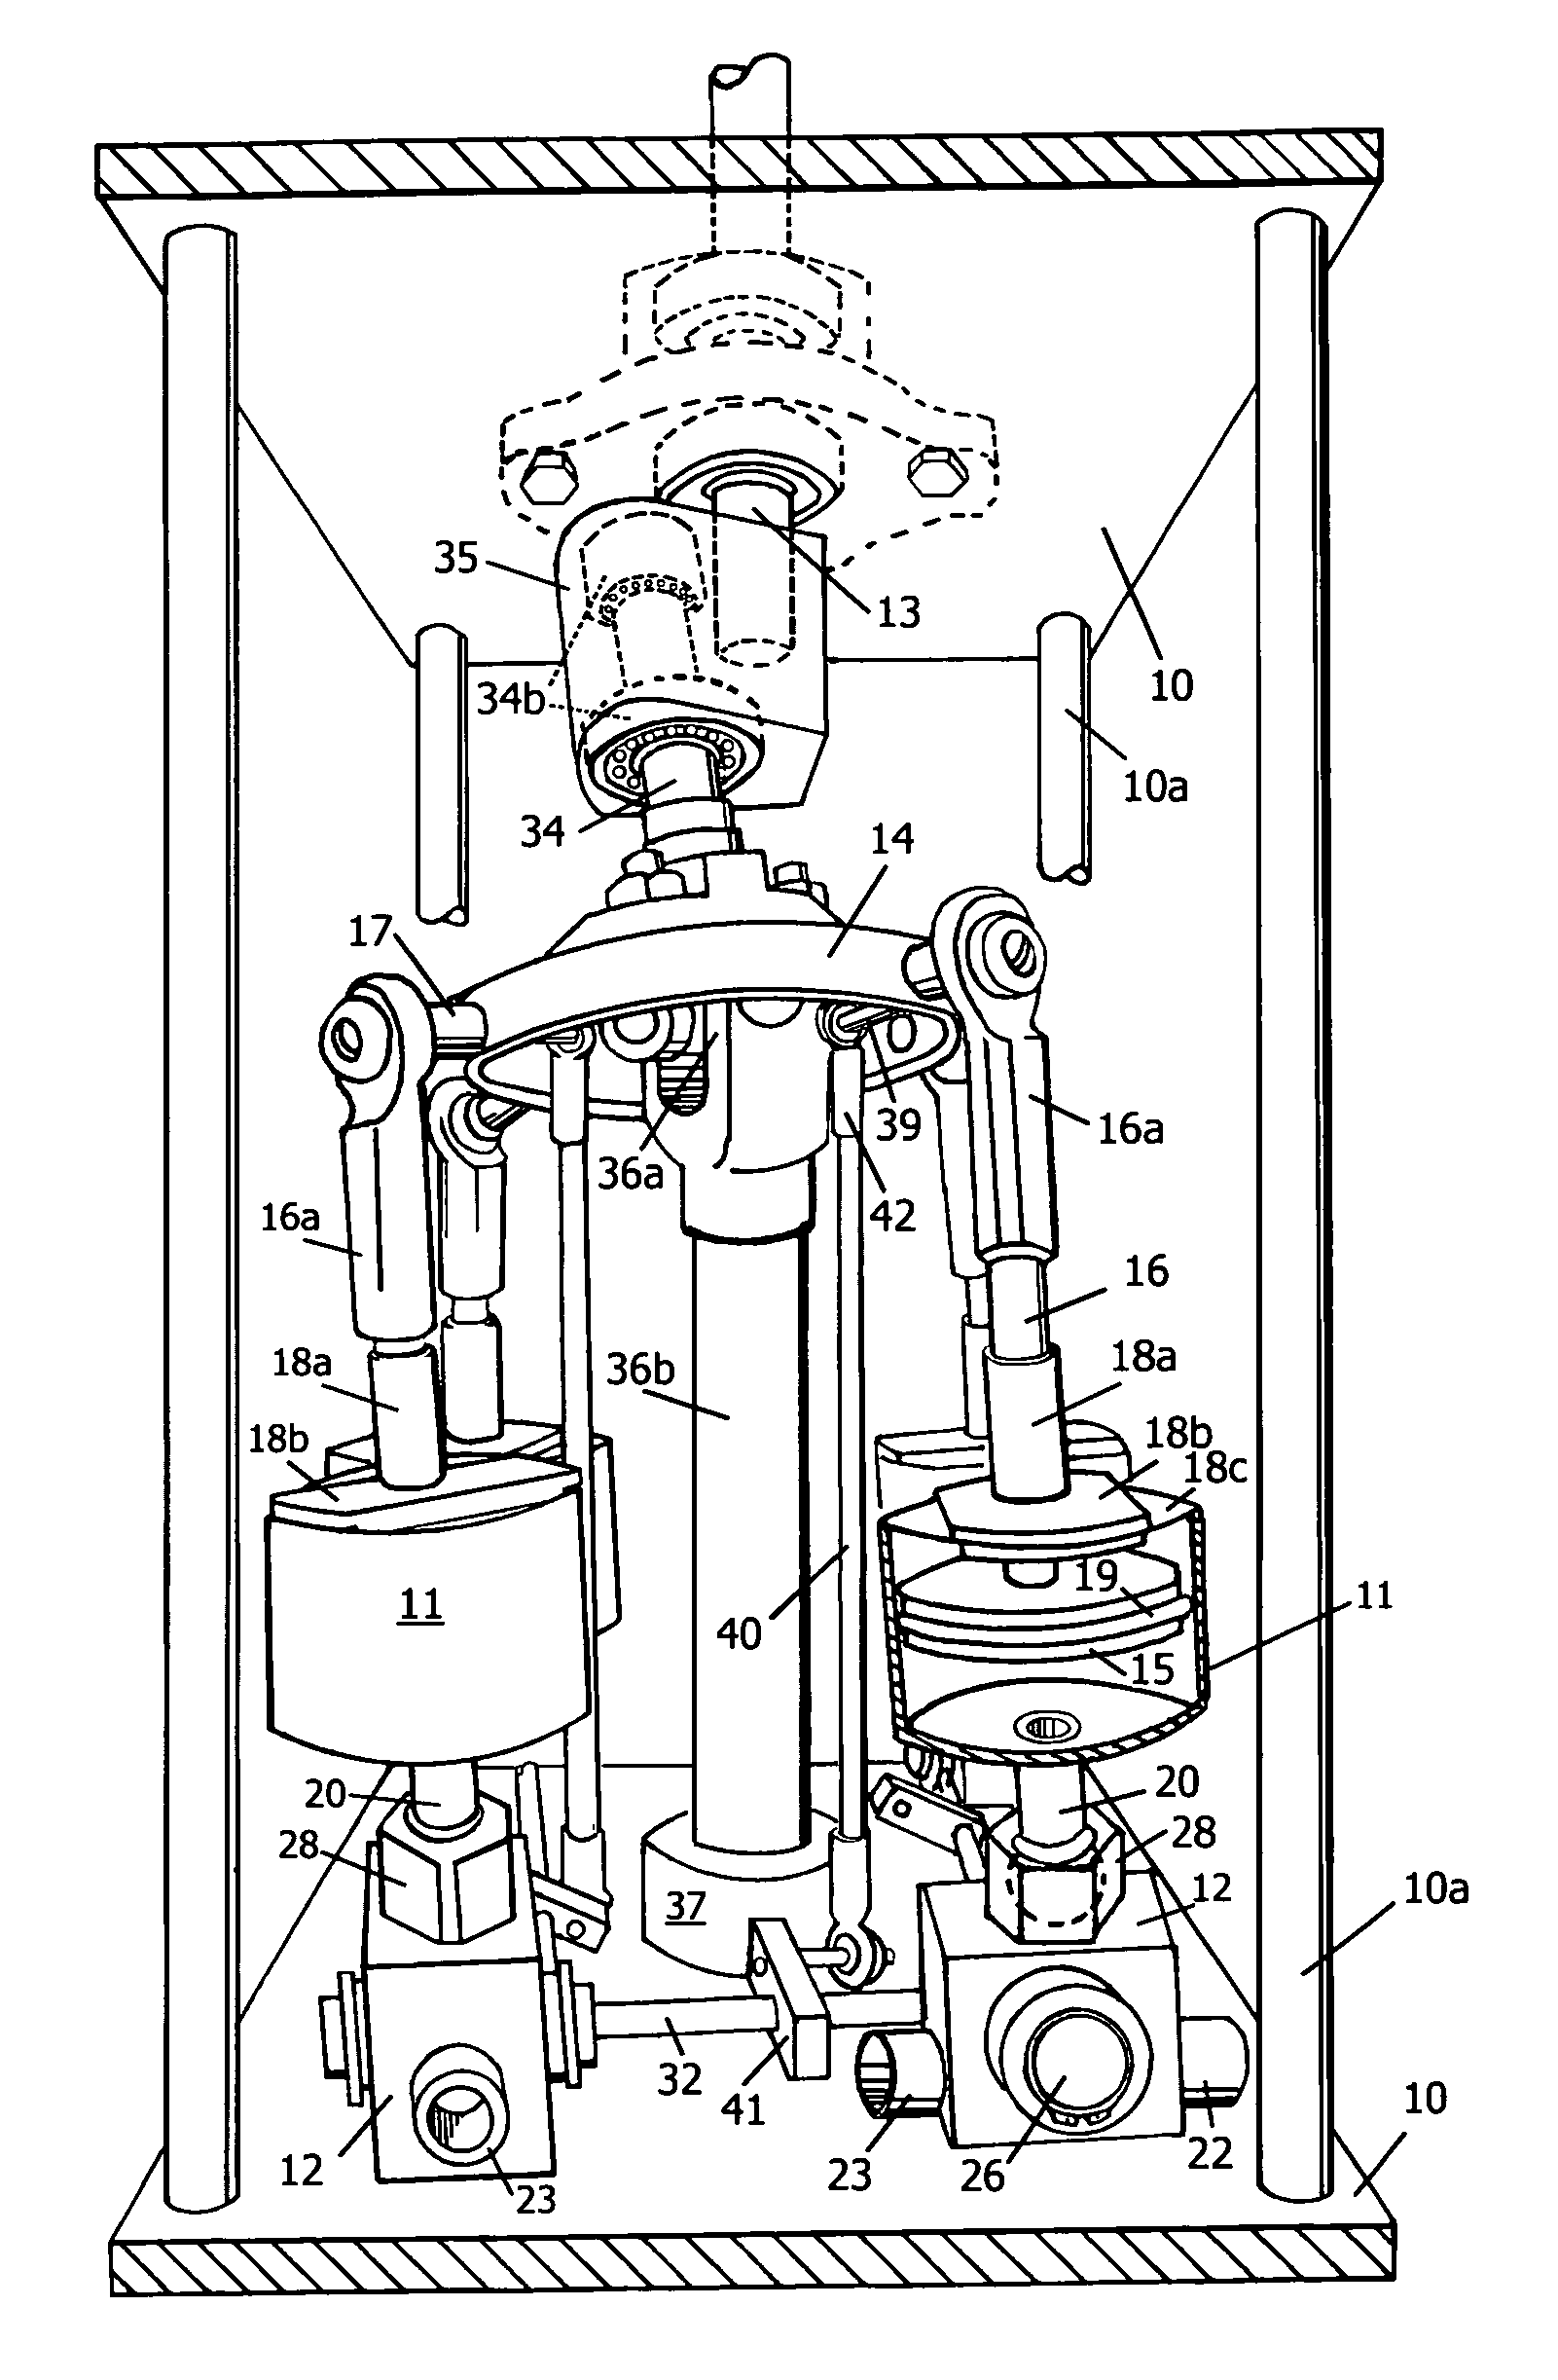 Straight-line piston fluid engine with wobble drive valve actuation